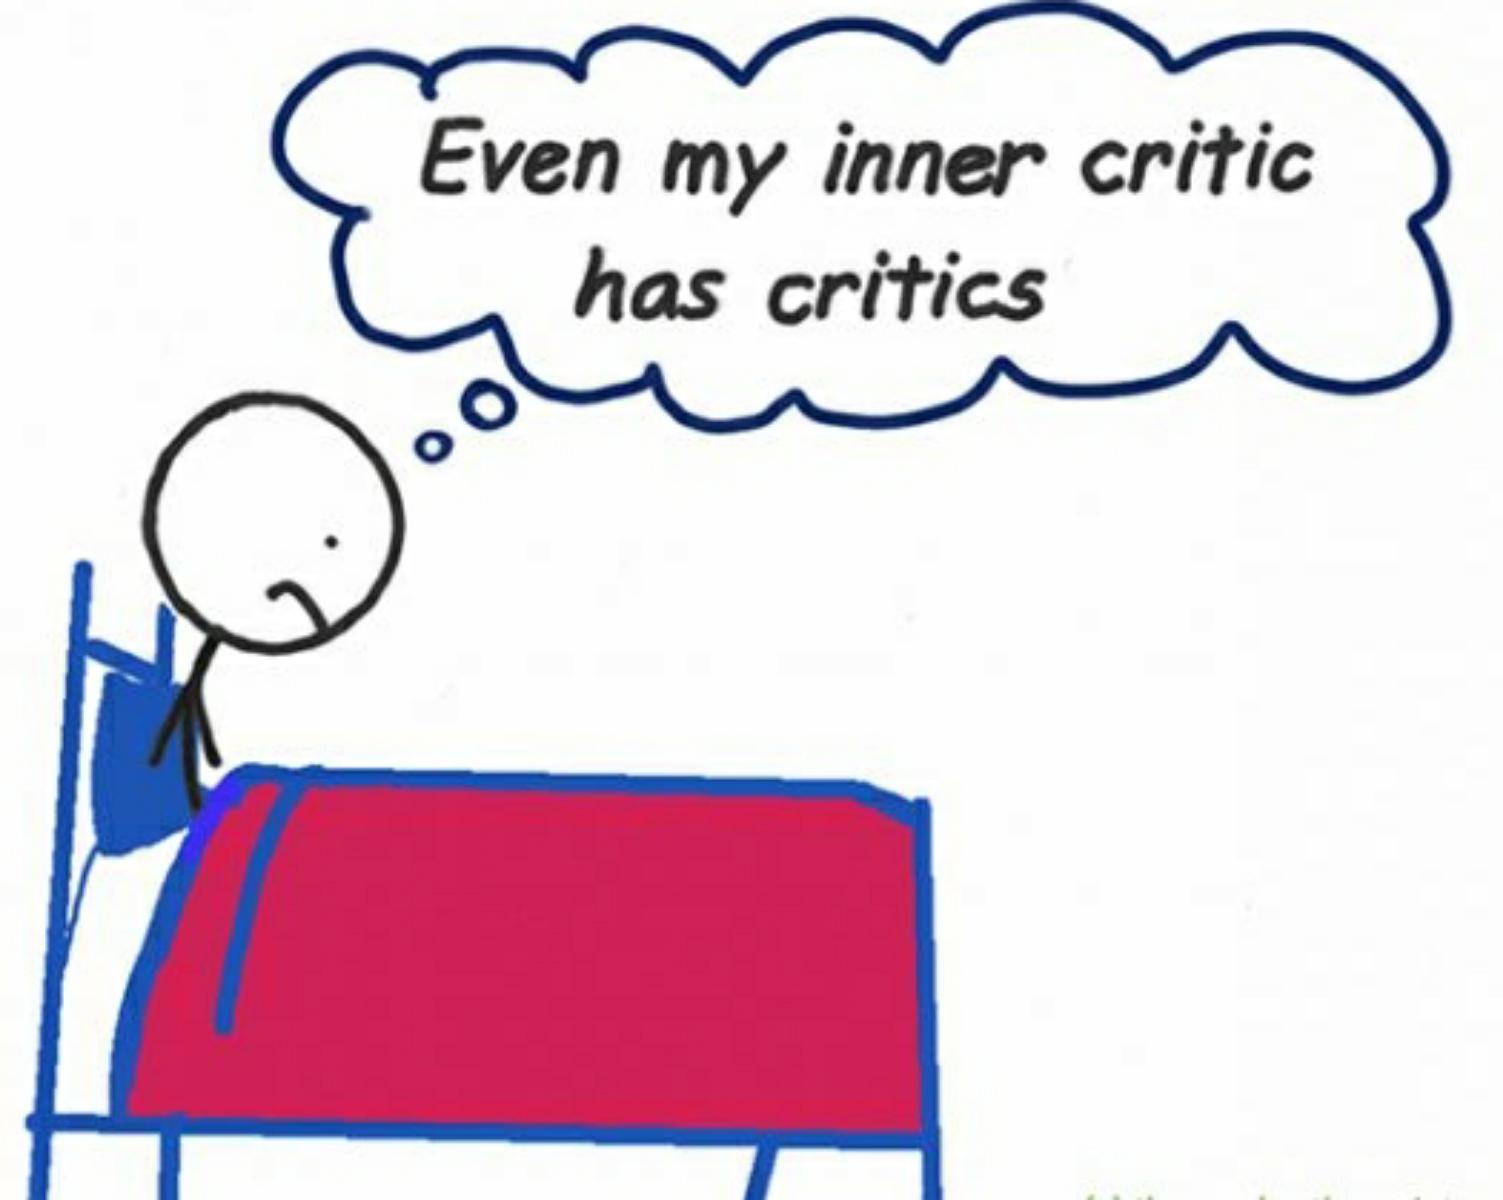 3. Face your inner critics